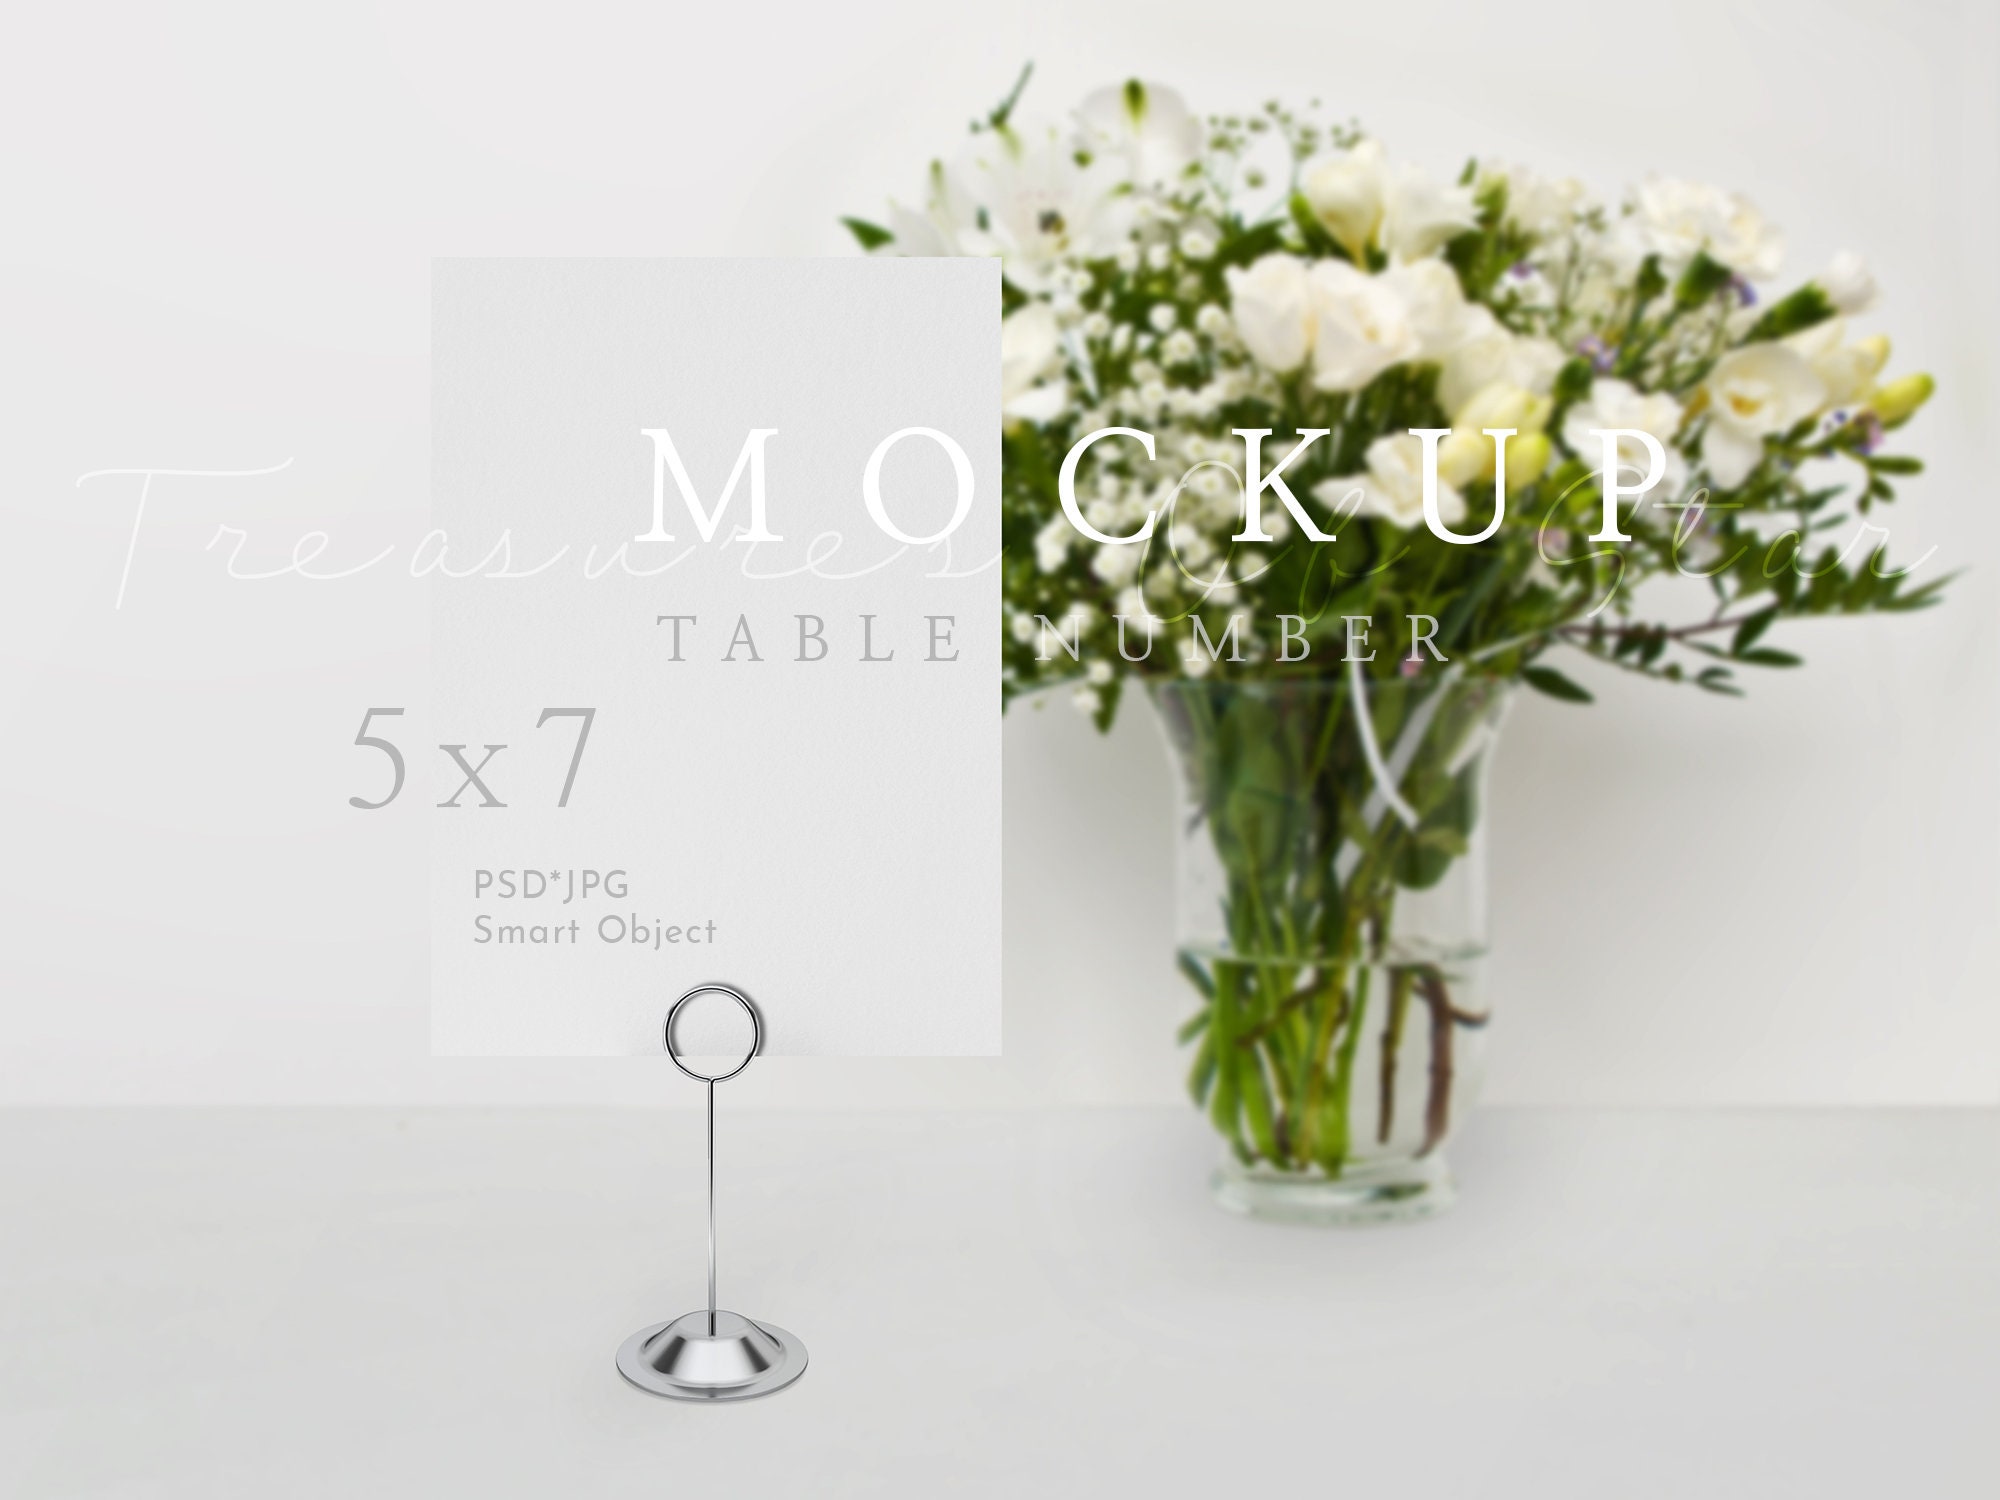 5x7 Table Number Card Mockup Place Card Mockup Wedding | Etsy